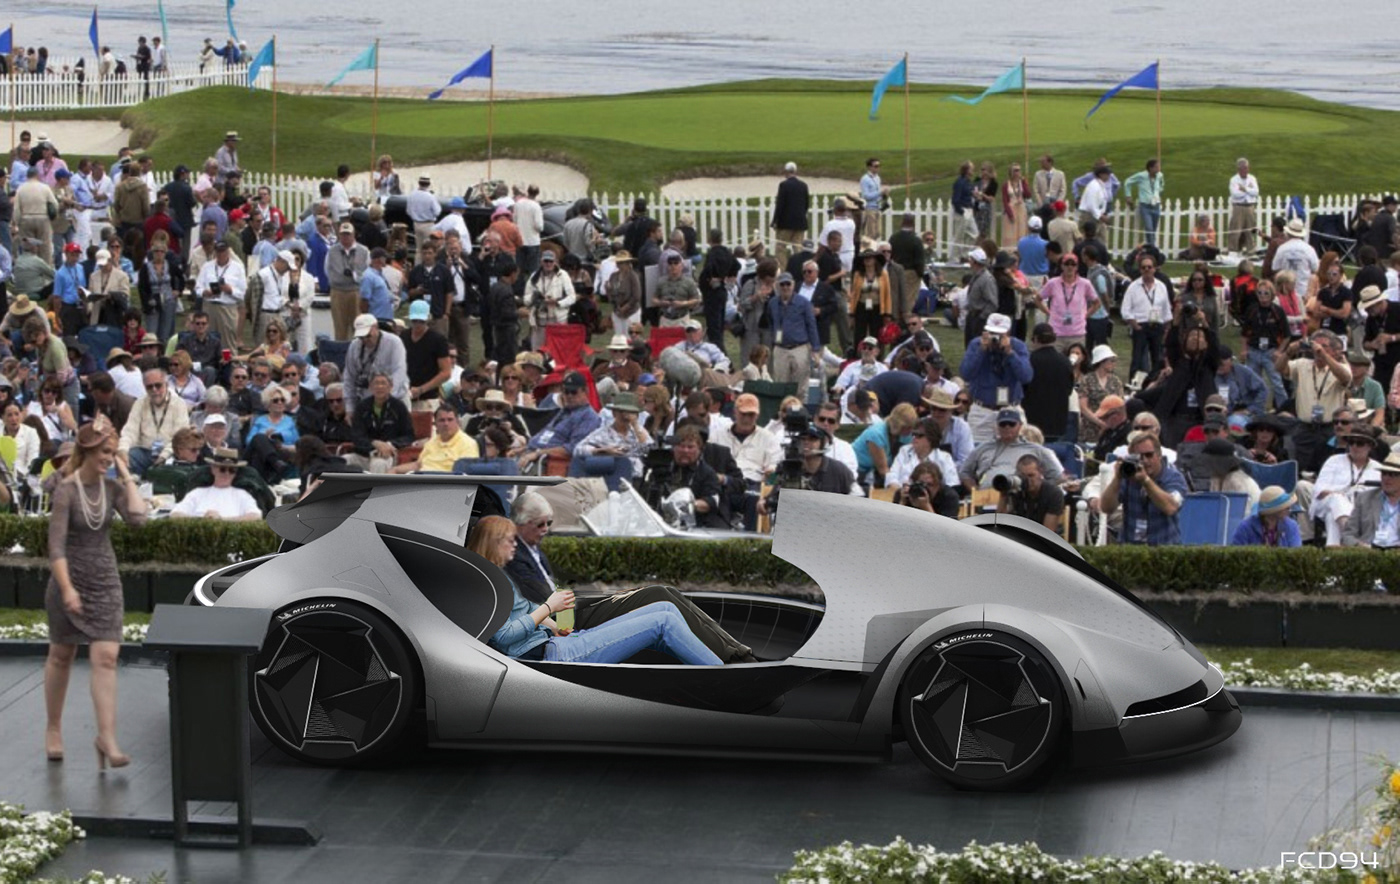 michelin design contest Futuristic Car car design Transportation Design luxury car luxury design argentina finalist